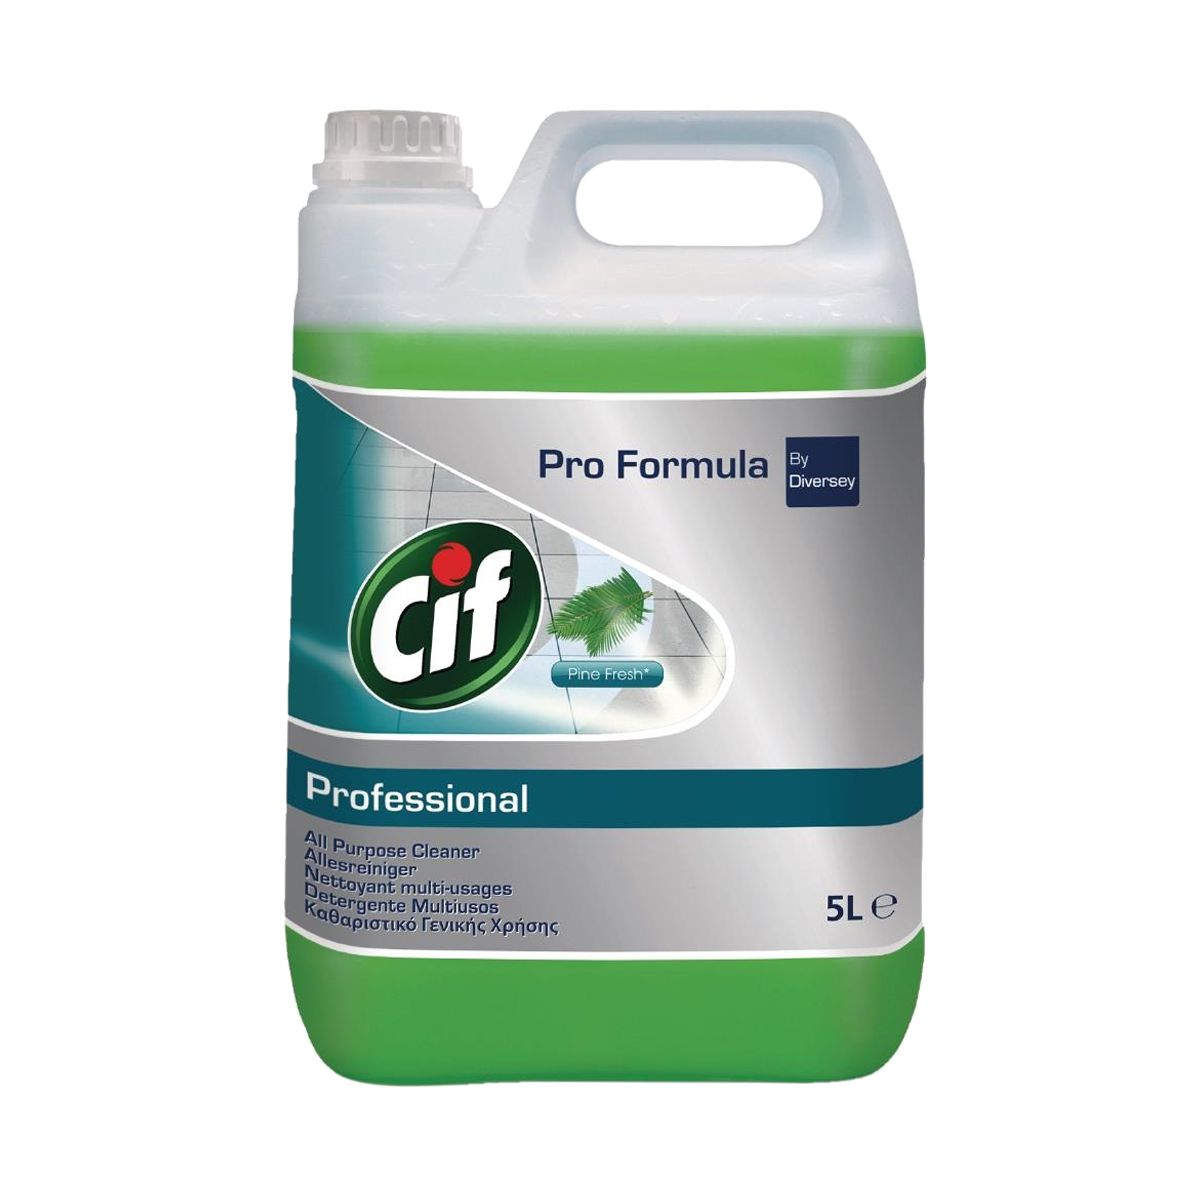 Detergente multiúsos frescura de pinho Cif Pro Formula by Diversey 5lt